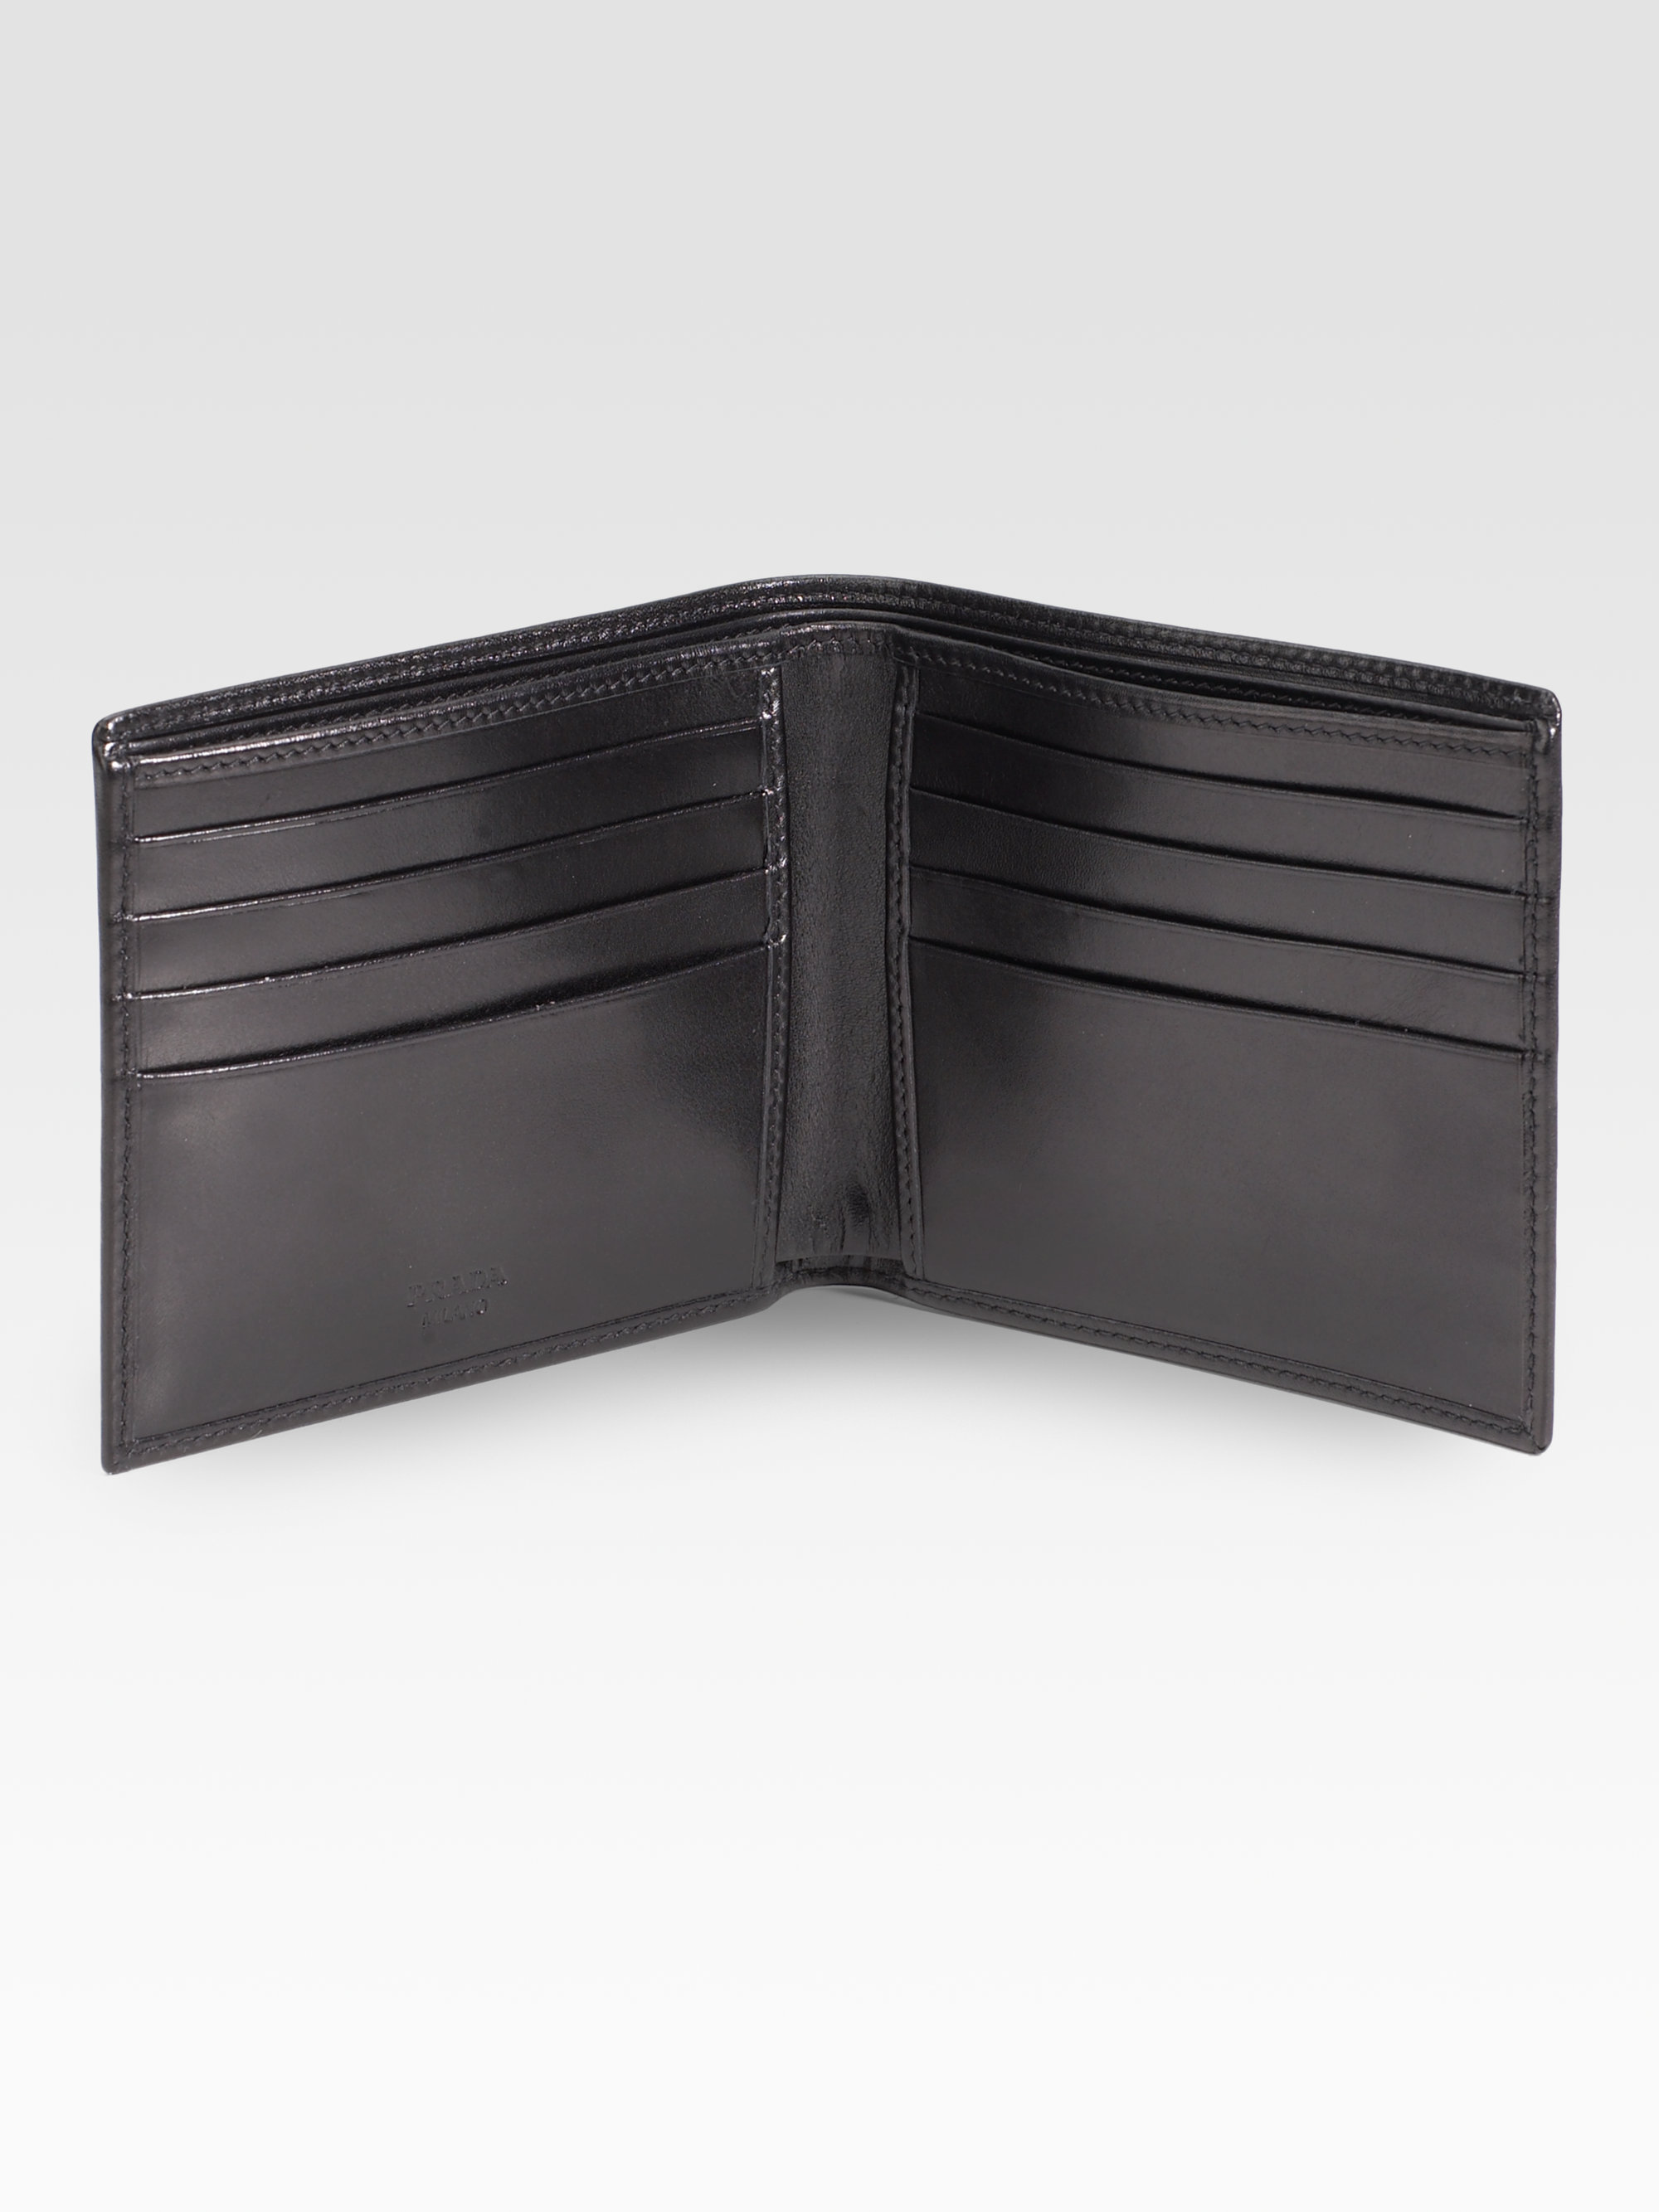 Prada Leather Wallet in Black for Men | Lyst  